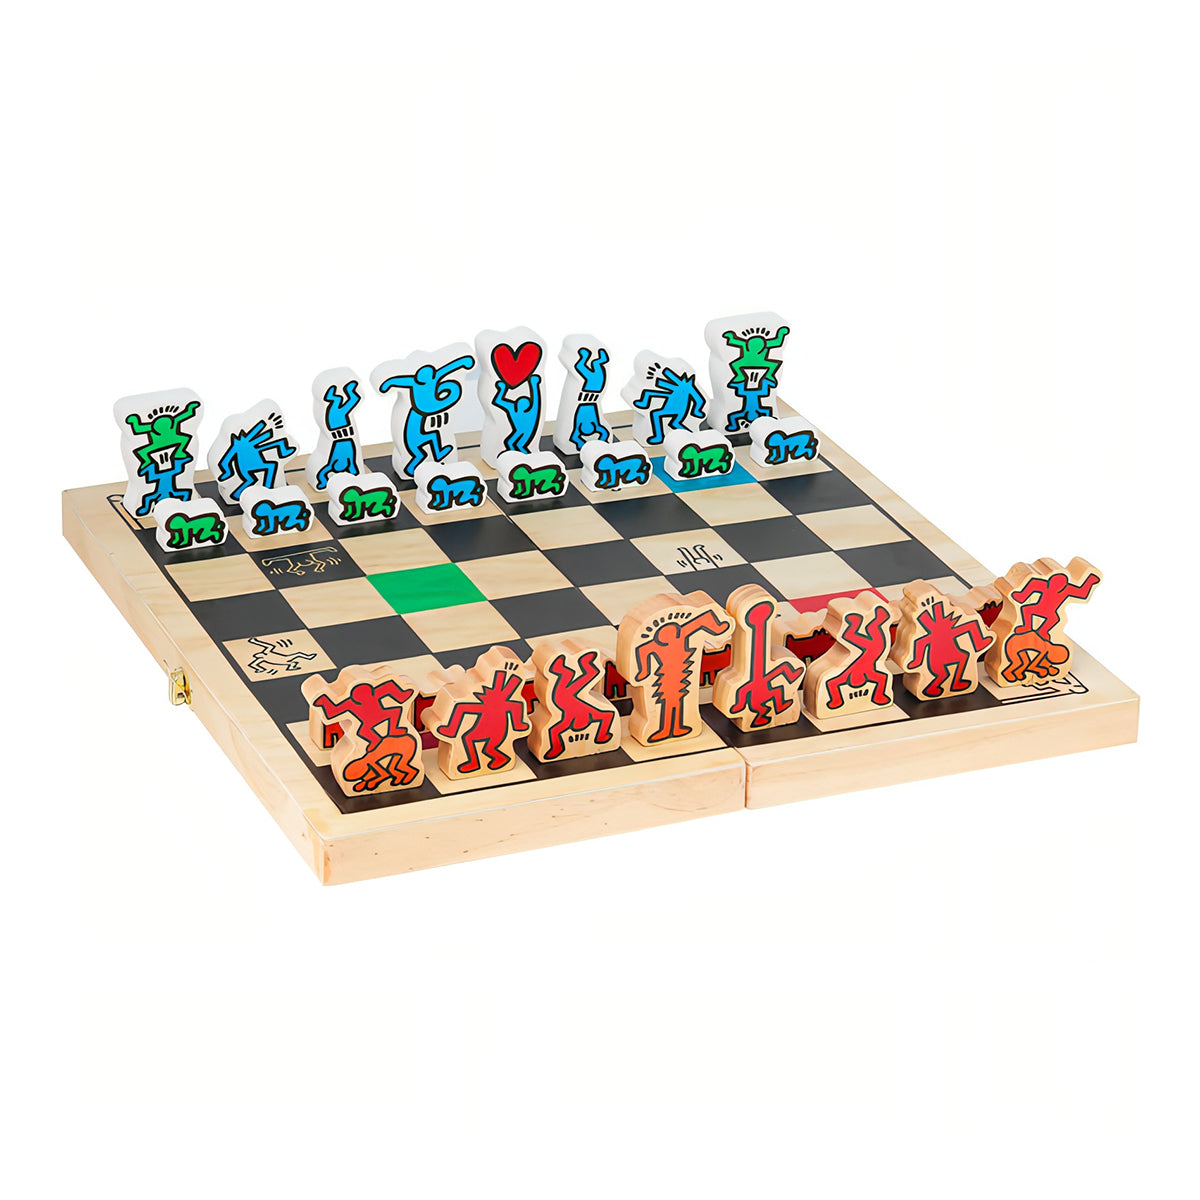 Keith Haring Chess Set